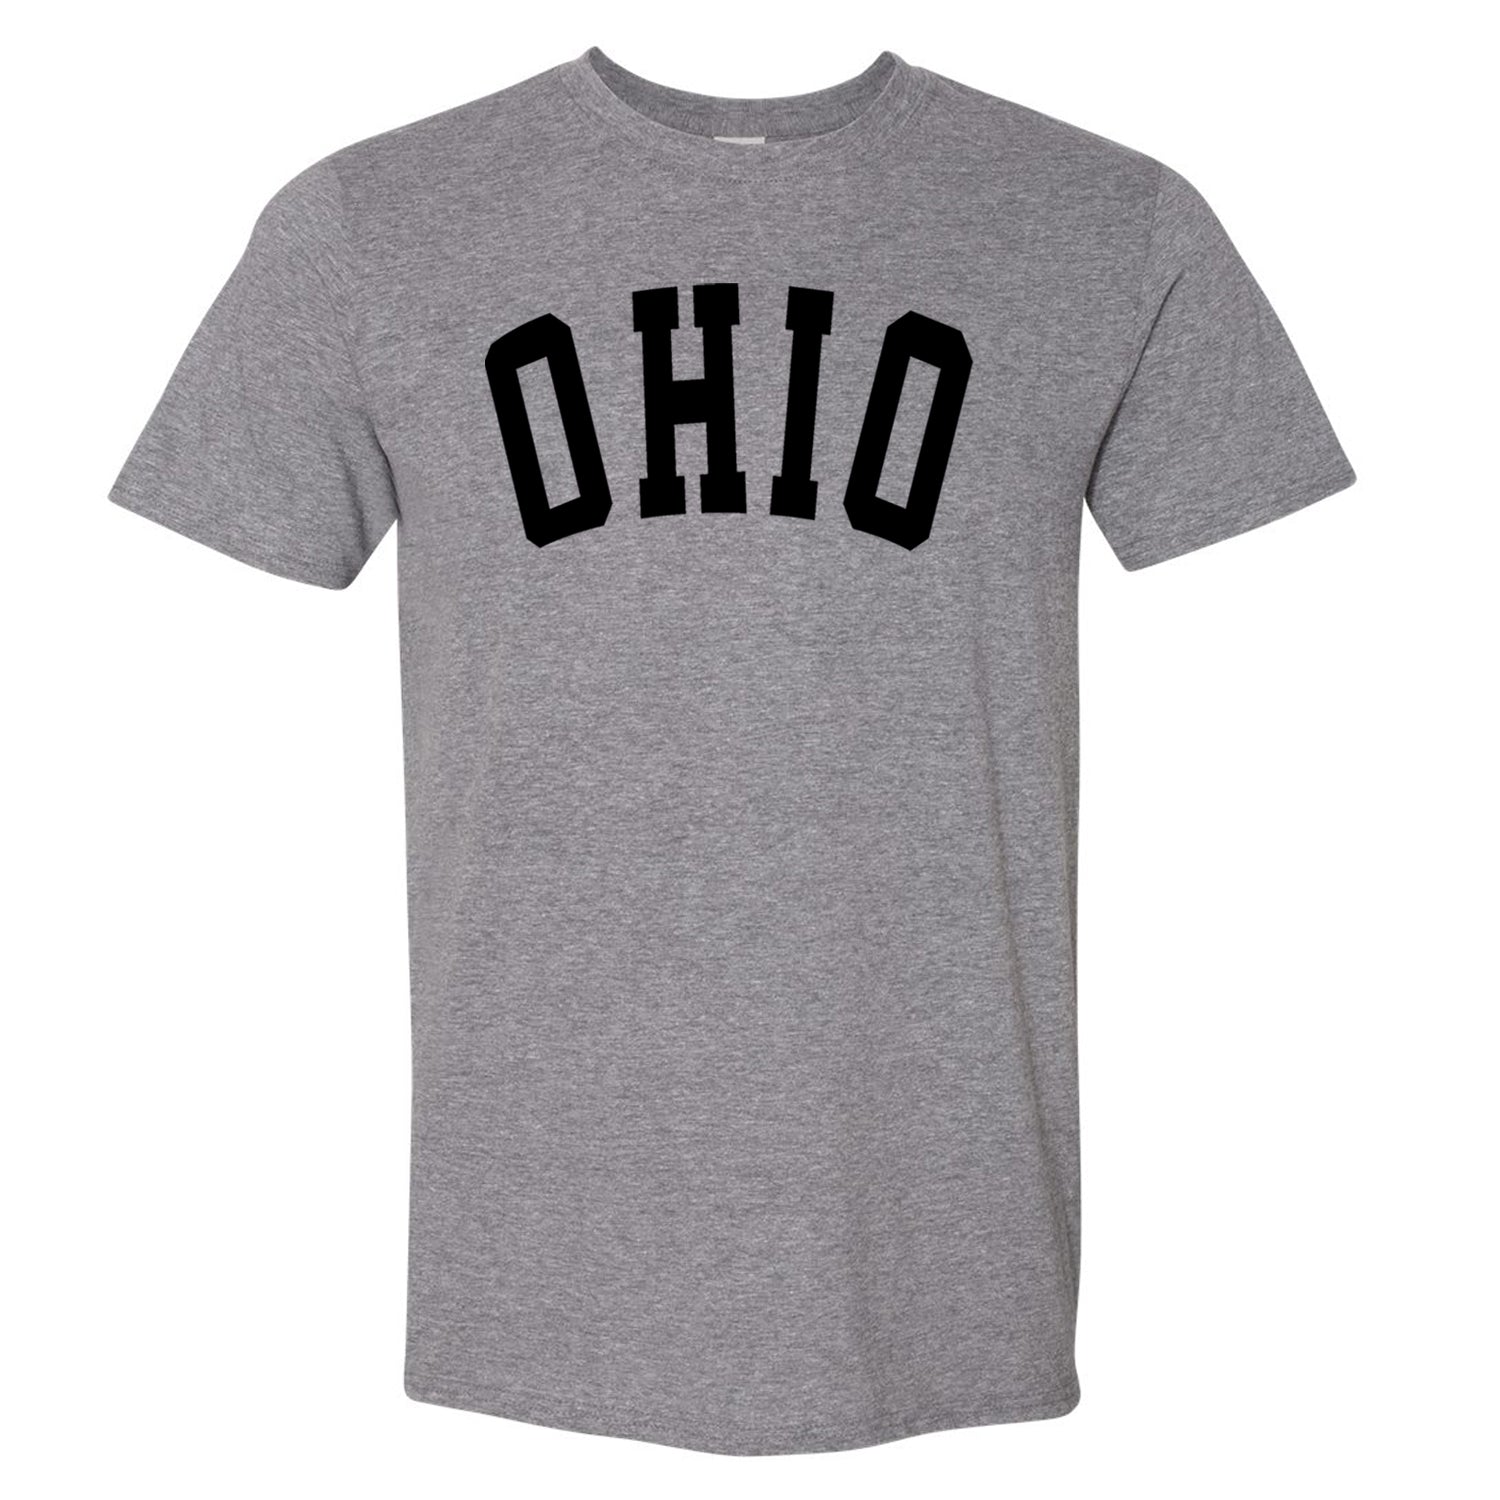 Tailgate Ohio black - Fleece Hoodie - Clothe Ohio - Ohio Shirts and Apparel